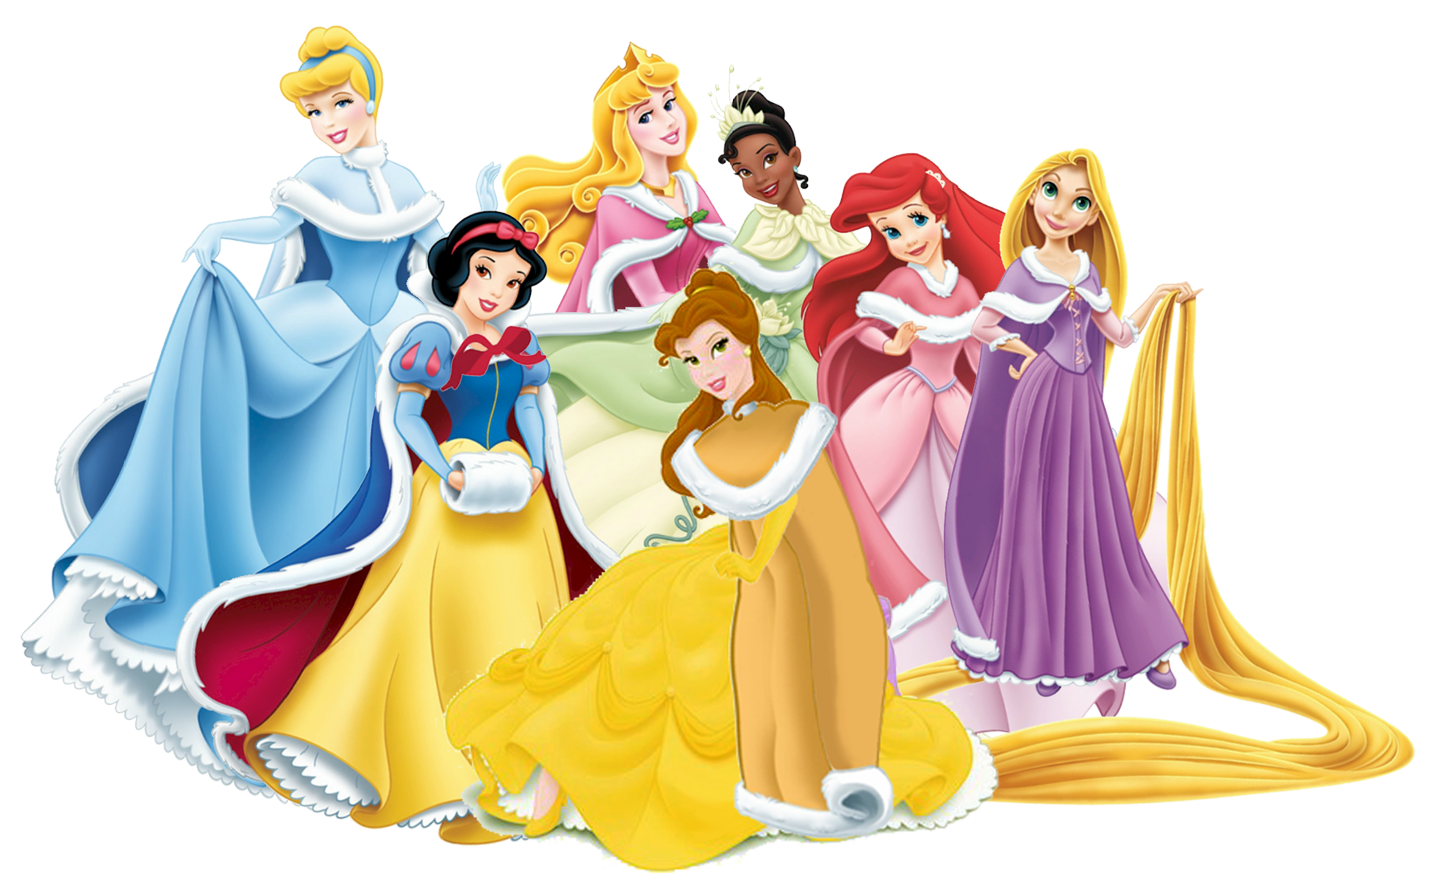 1440x895 Free Disney Princess Clipart, Download Free Disney Princess Clipar...